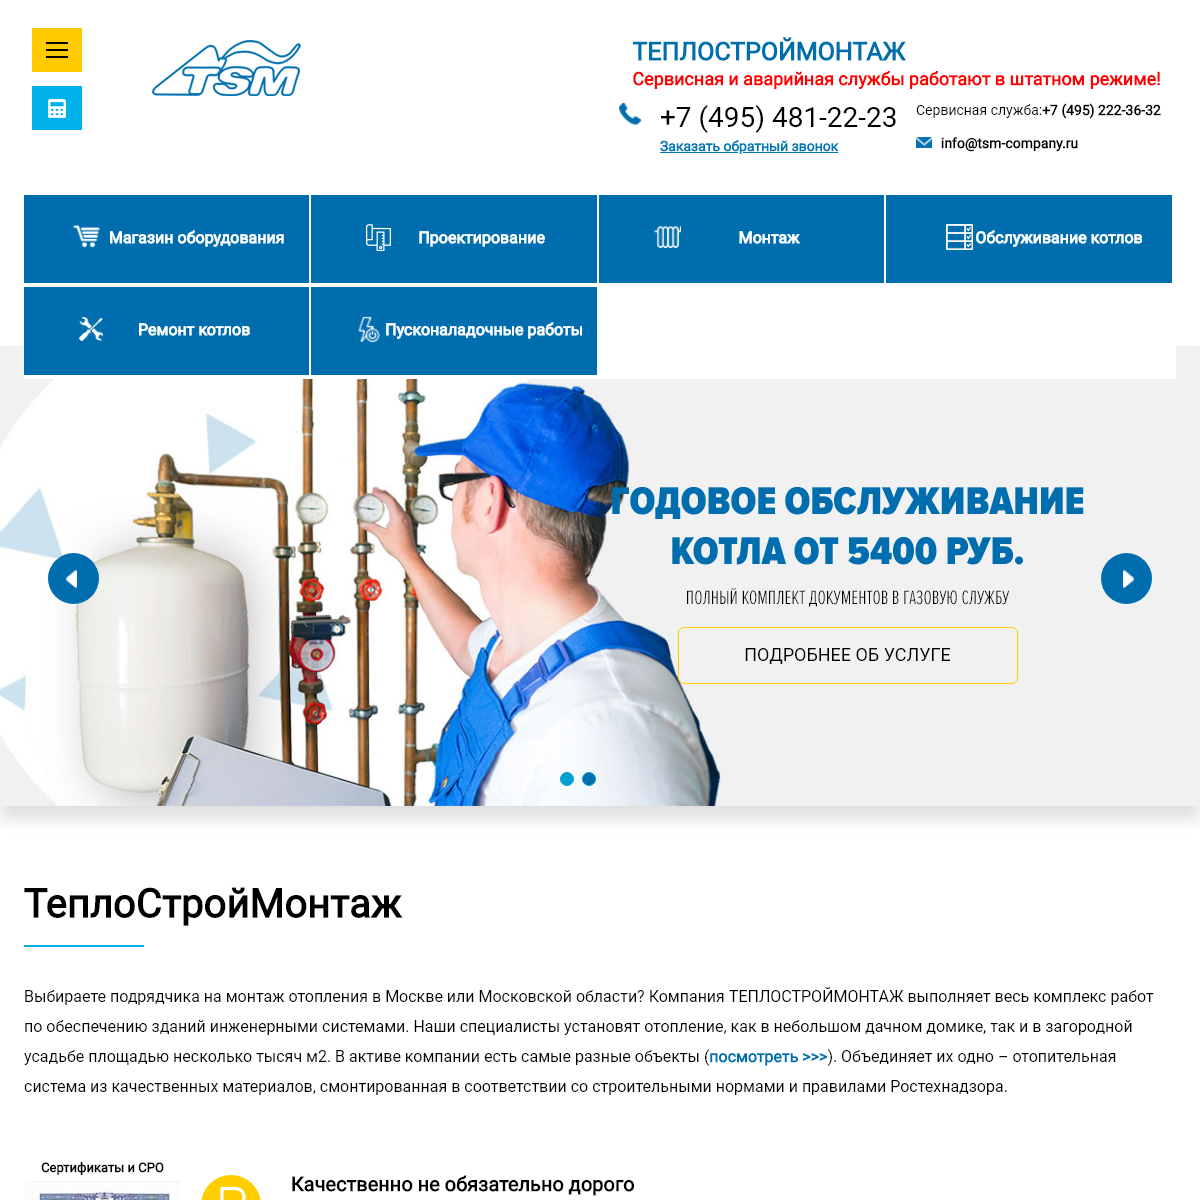 A complete backup of tsm-company.ru